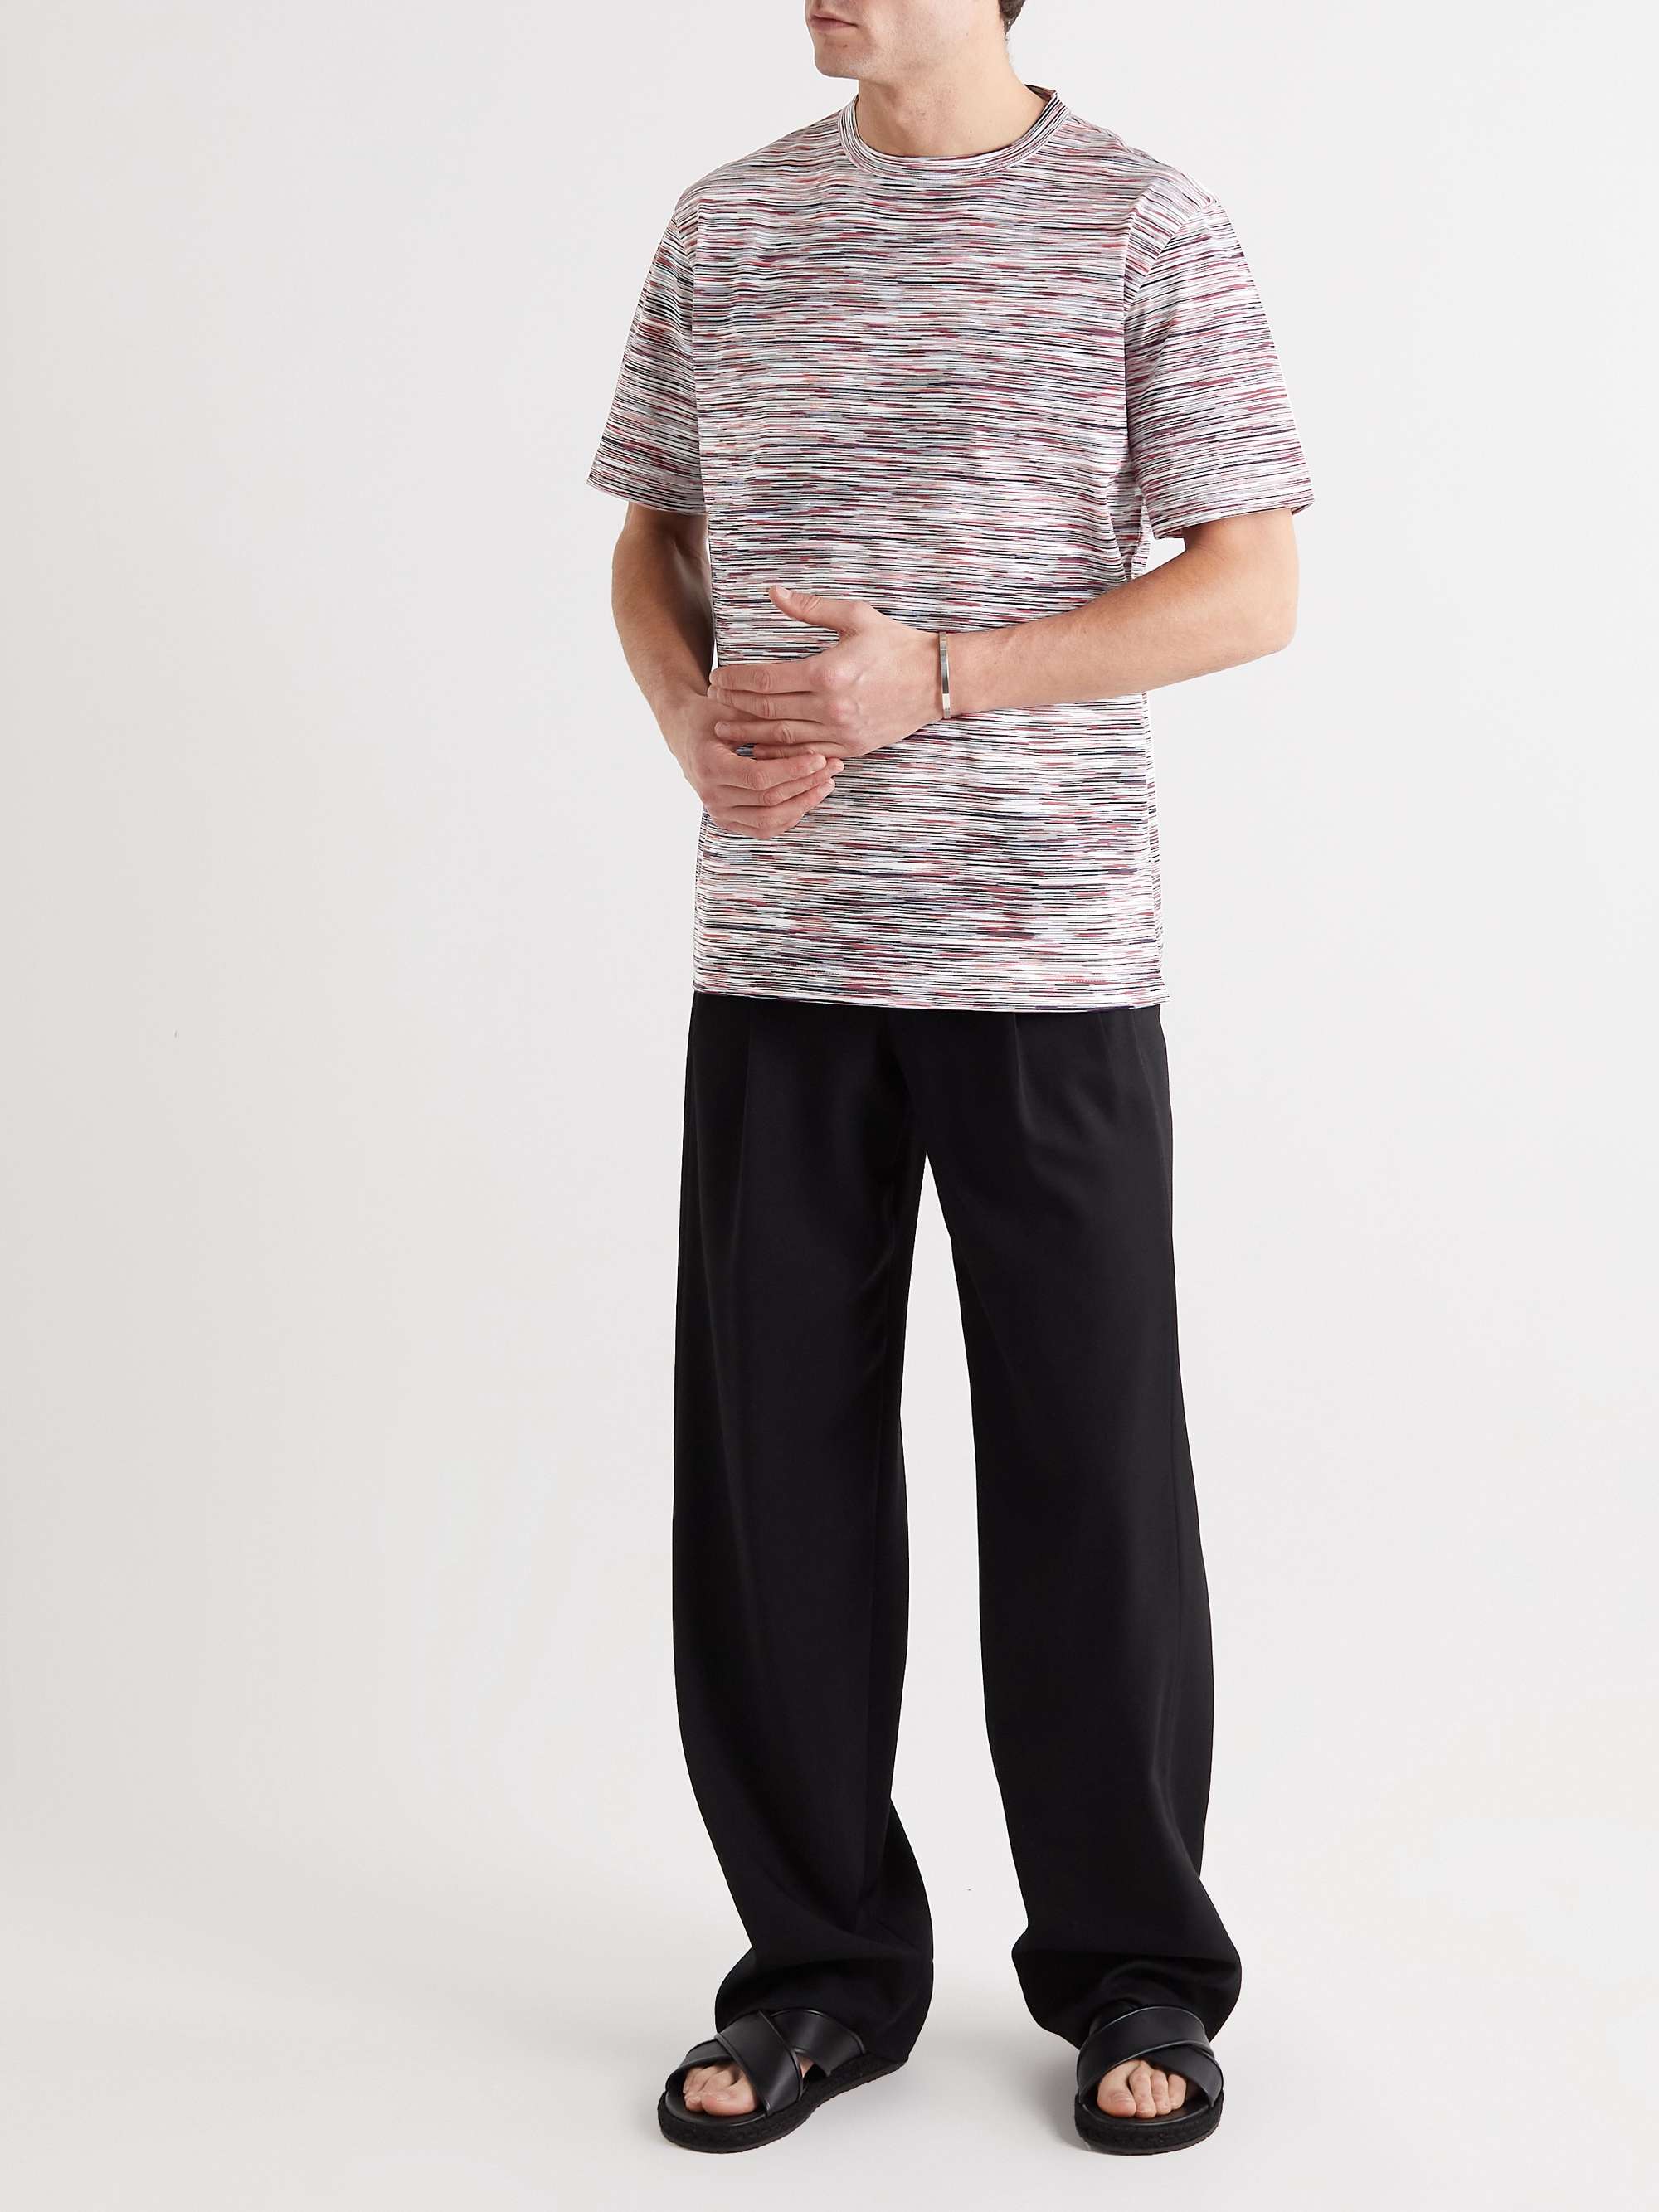 MISSONI Striped Cotton-Jersey T-Shirt